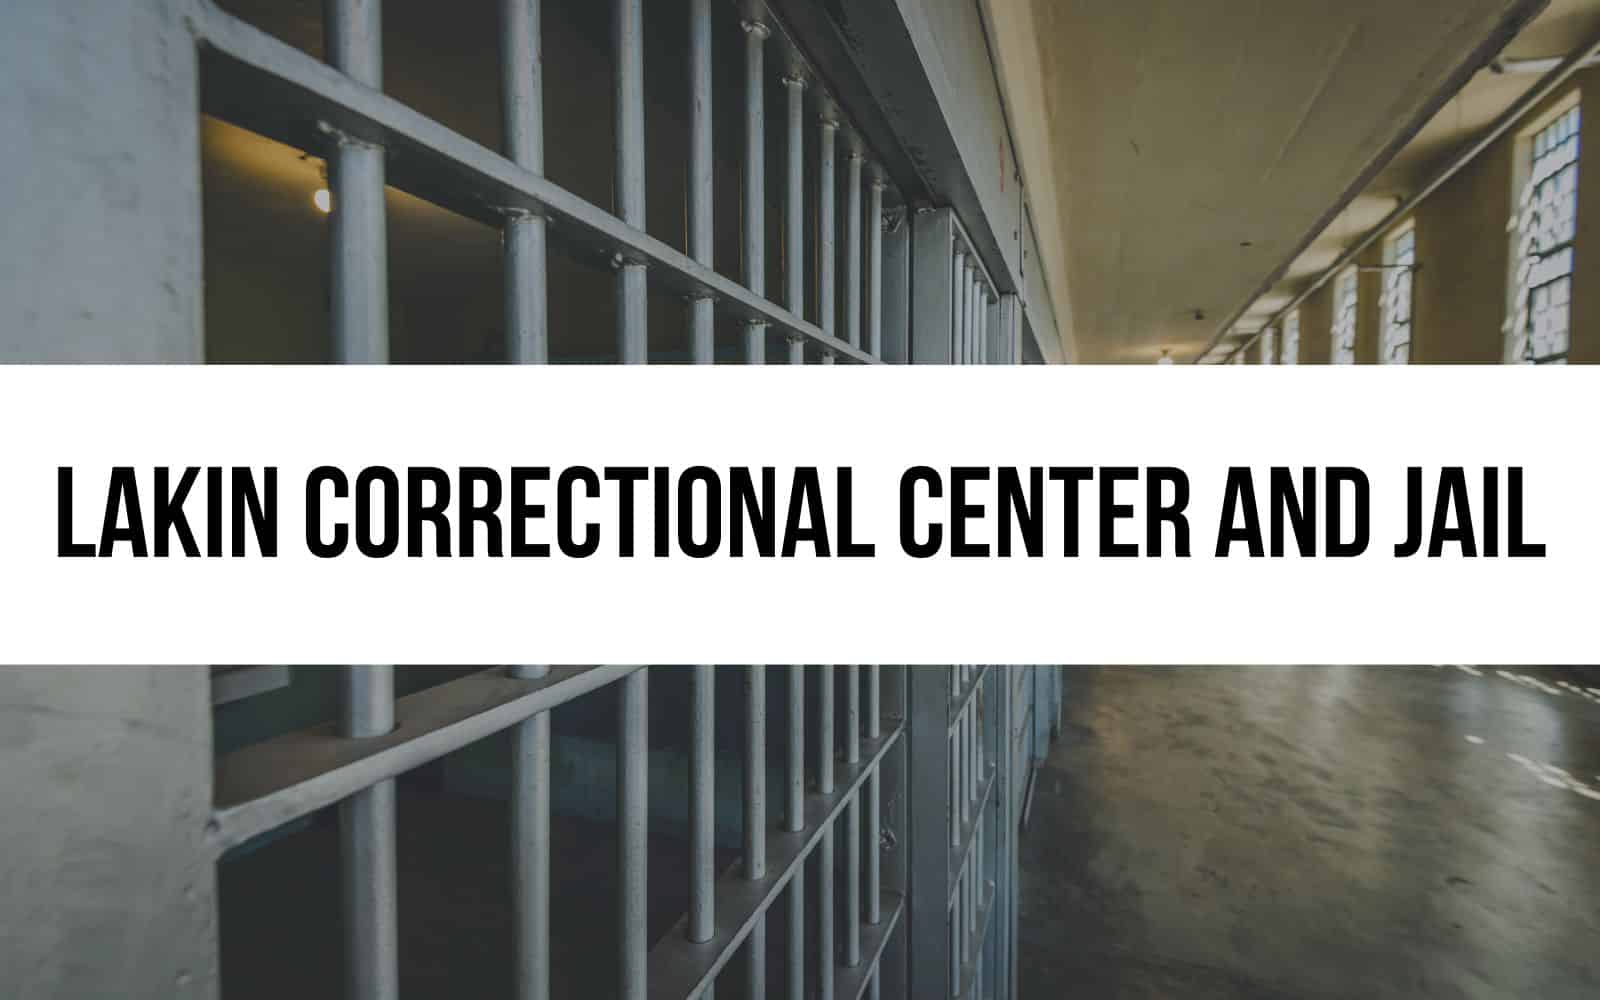 Lakin Correctional Center and Jail